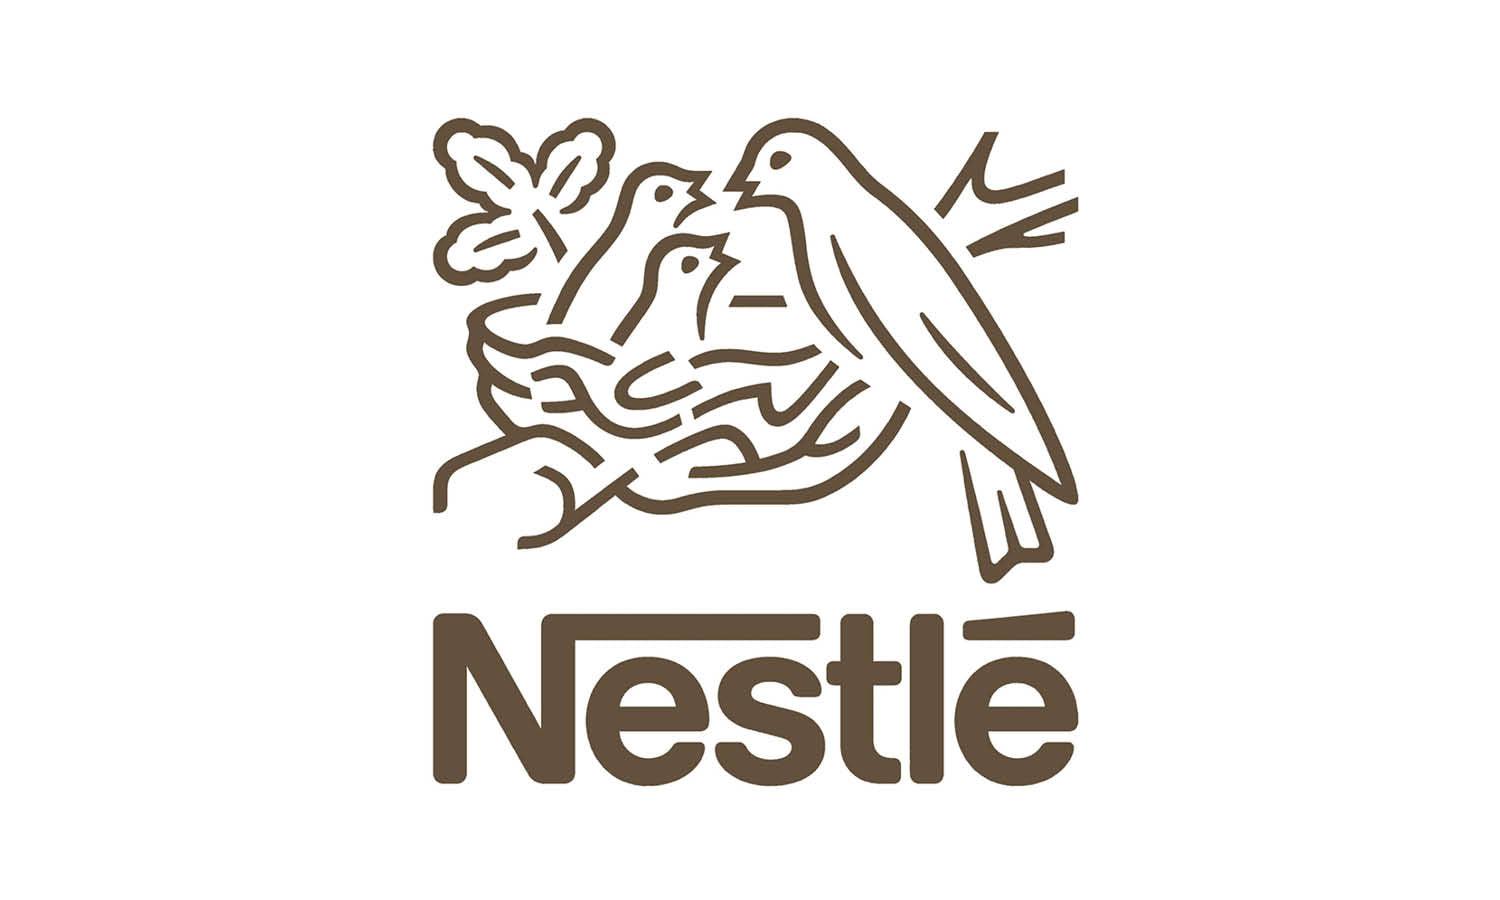 Nestlé Logo Design: History & Evolution - Kreafolk